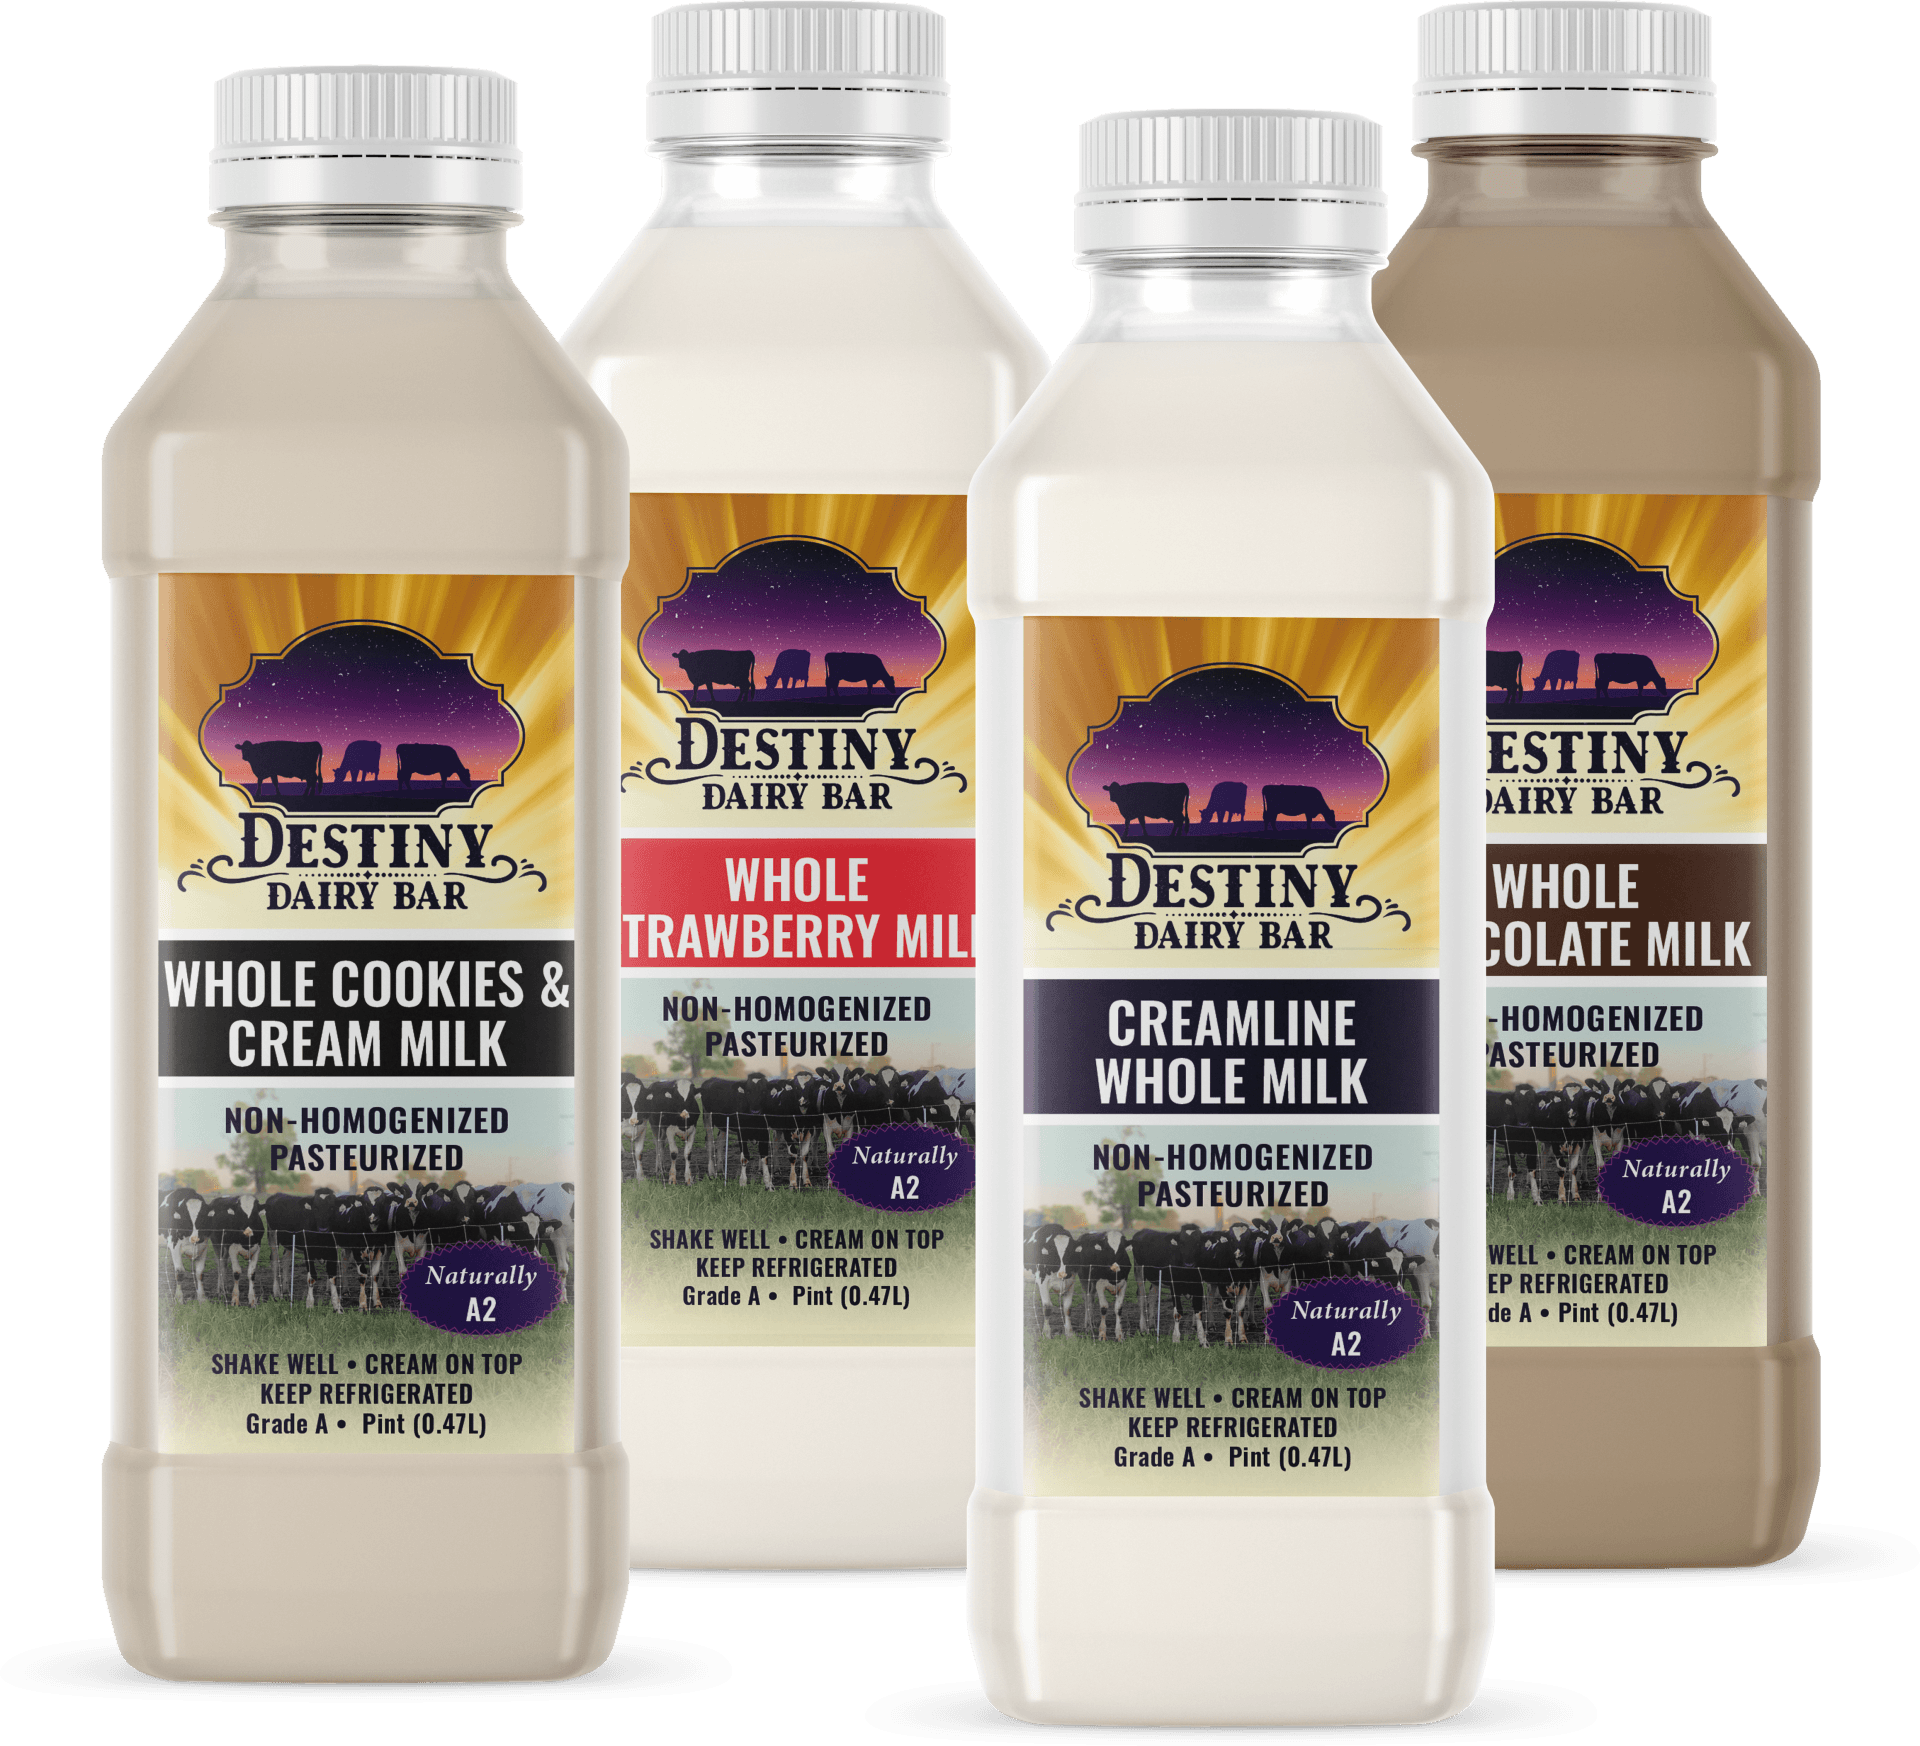 Destiny Dairy Bar - Milk Flavors - Whole Cookies & Cream Milk, Whole Strawberry Milk, Creamline Whole Milk, Whole Chocolate Milk